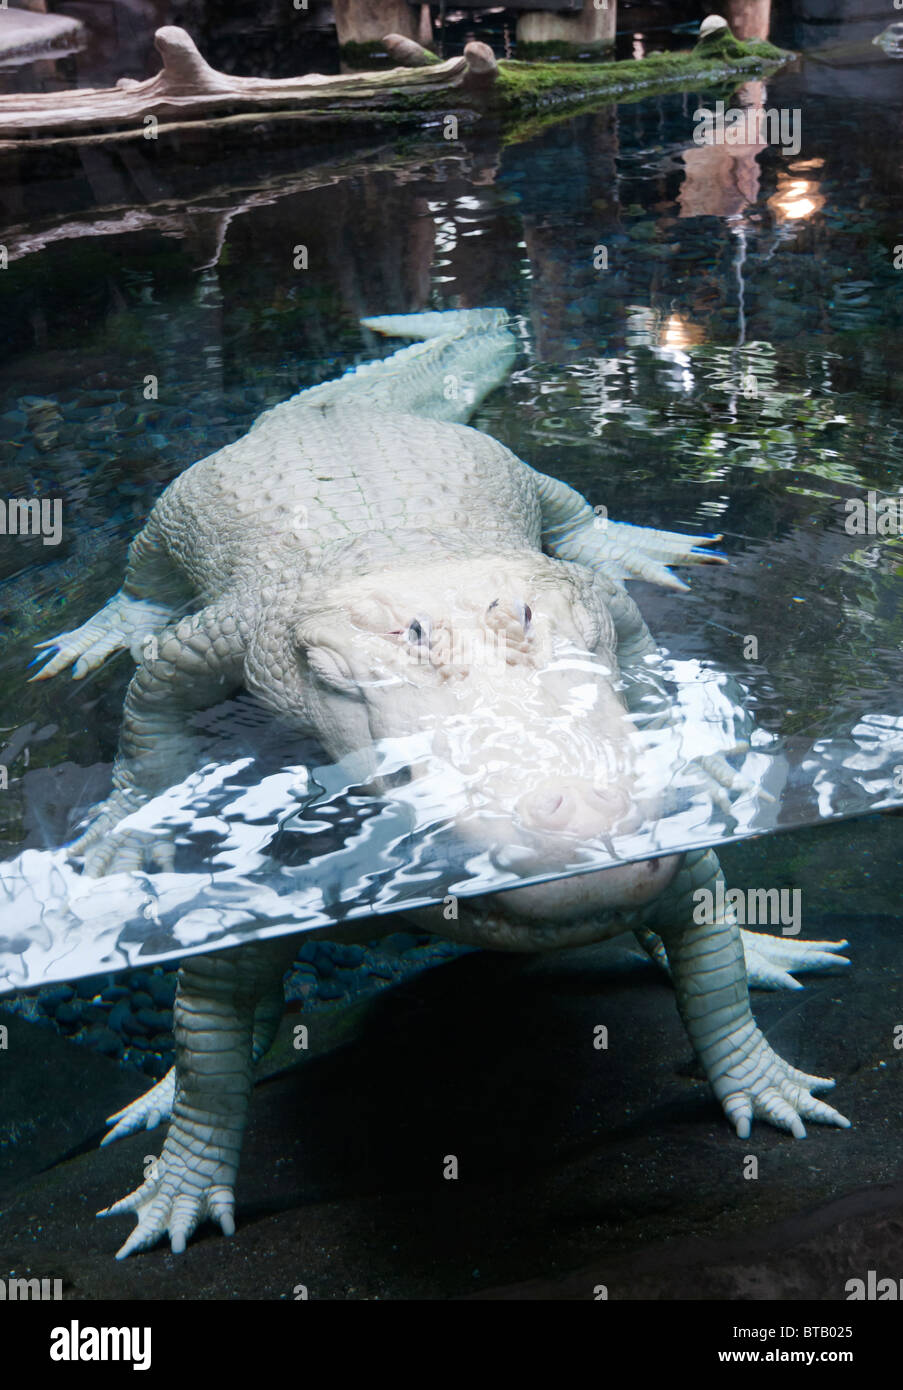 Louisiana, New Orleans, French Quarter, Audubon Aquarium of the Americas,  rare Luecistic White Alligator Stock Photo - Alamy